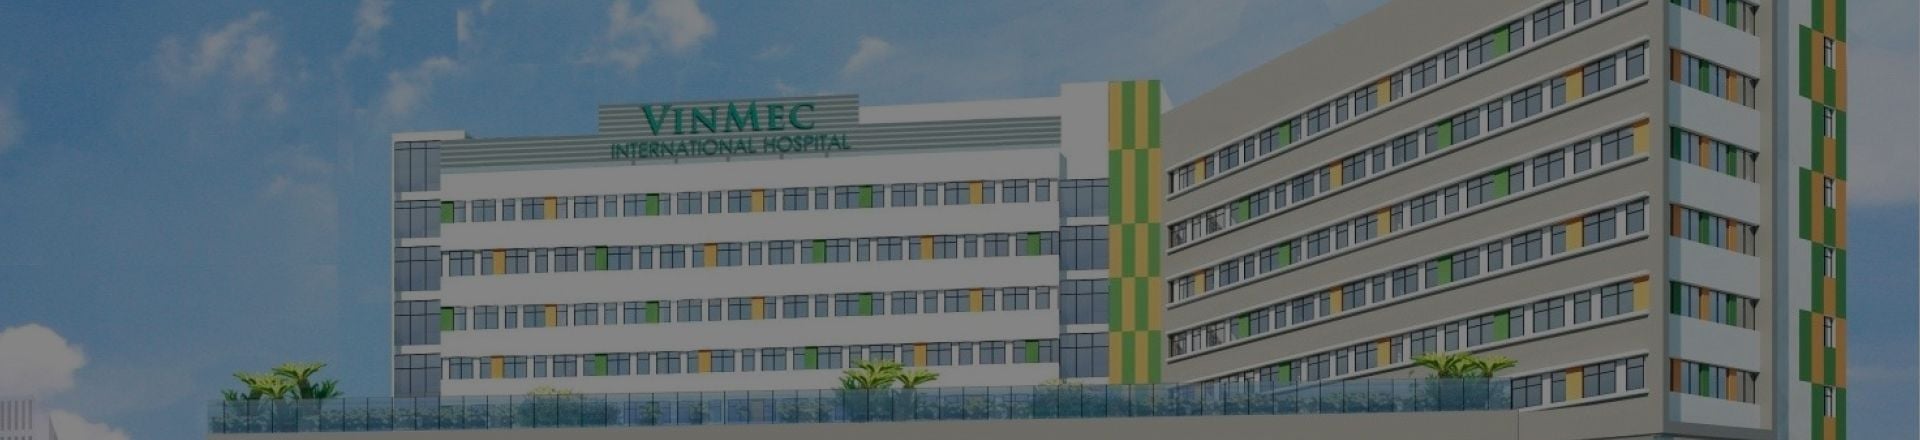 
Vinmec Nha Trang International Hospital
